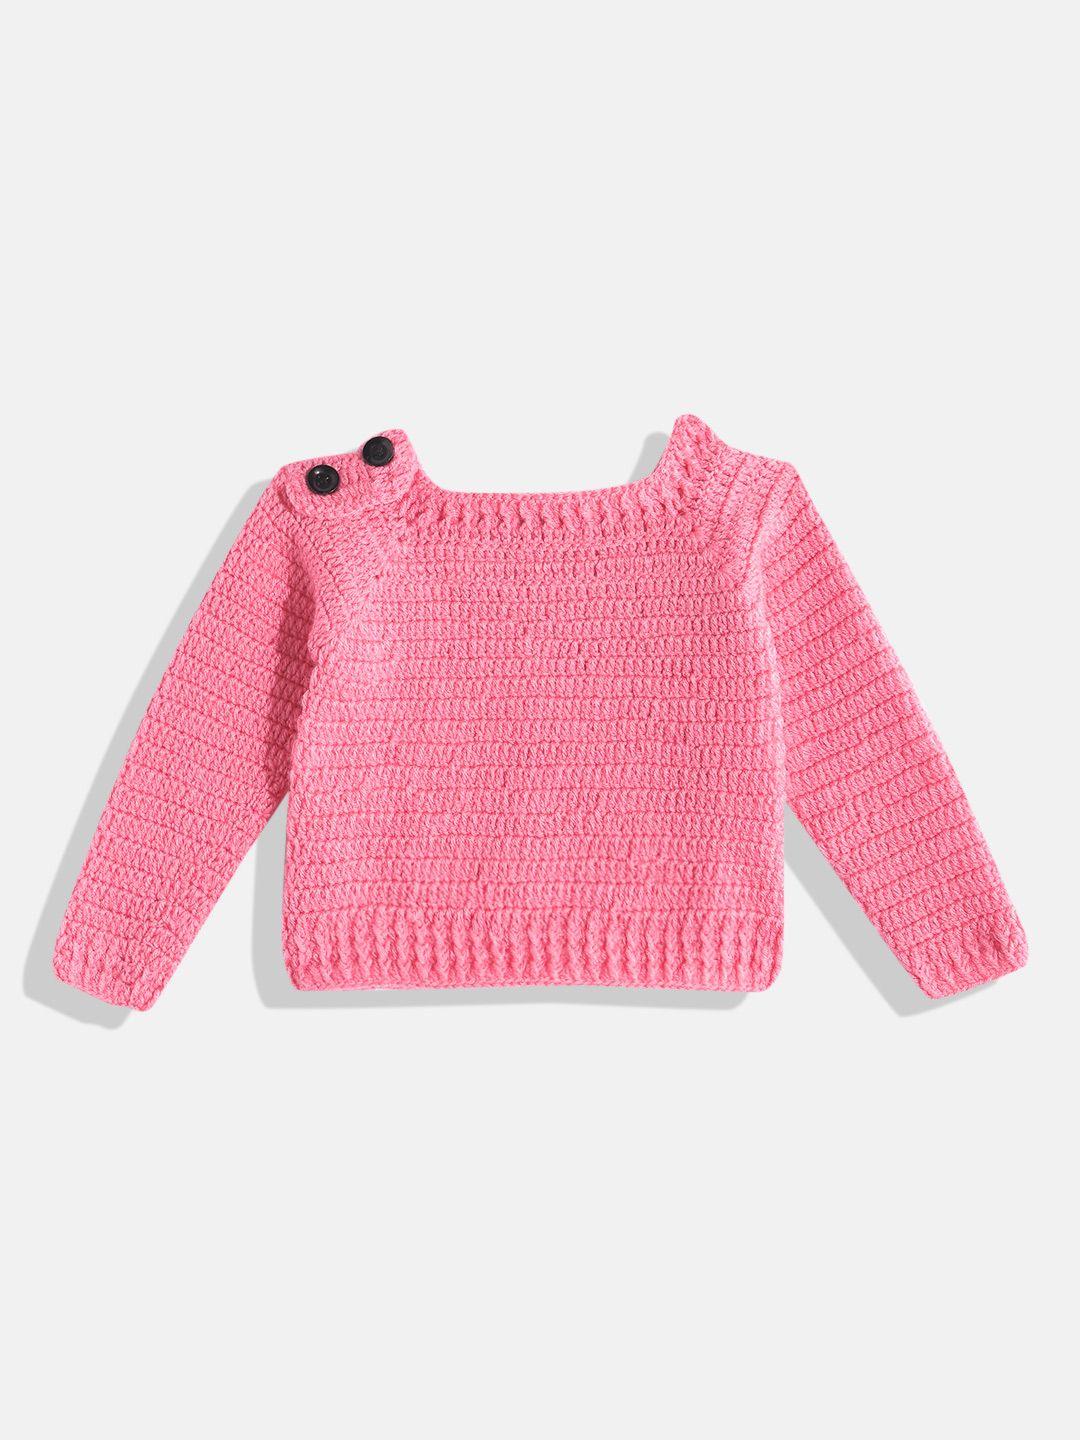 chutput-kids-woollen-sweater-vest